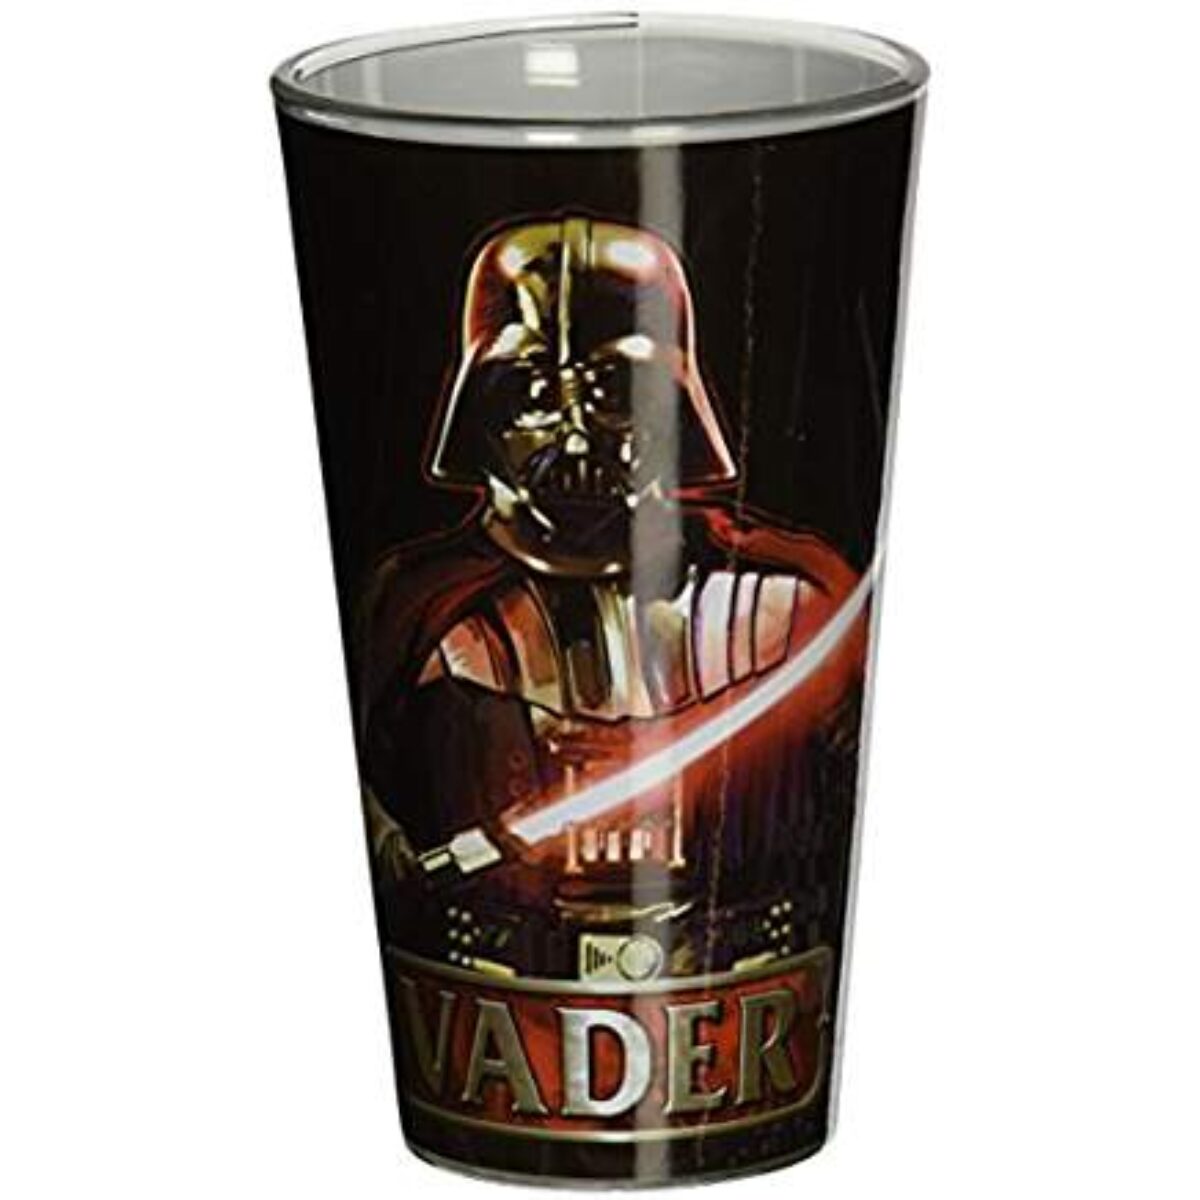 Star Wars: Defend The Empire Stemless Wine Glass - Otto's Granary